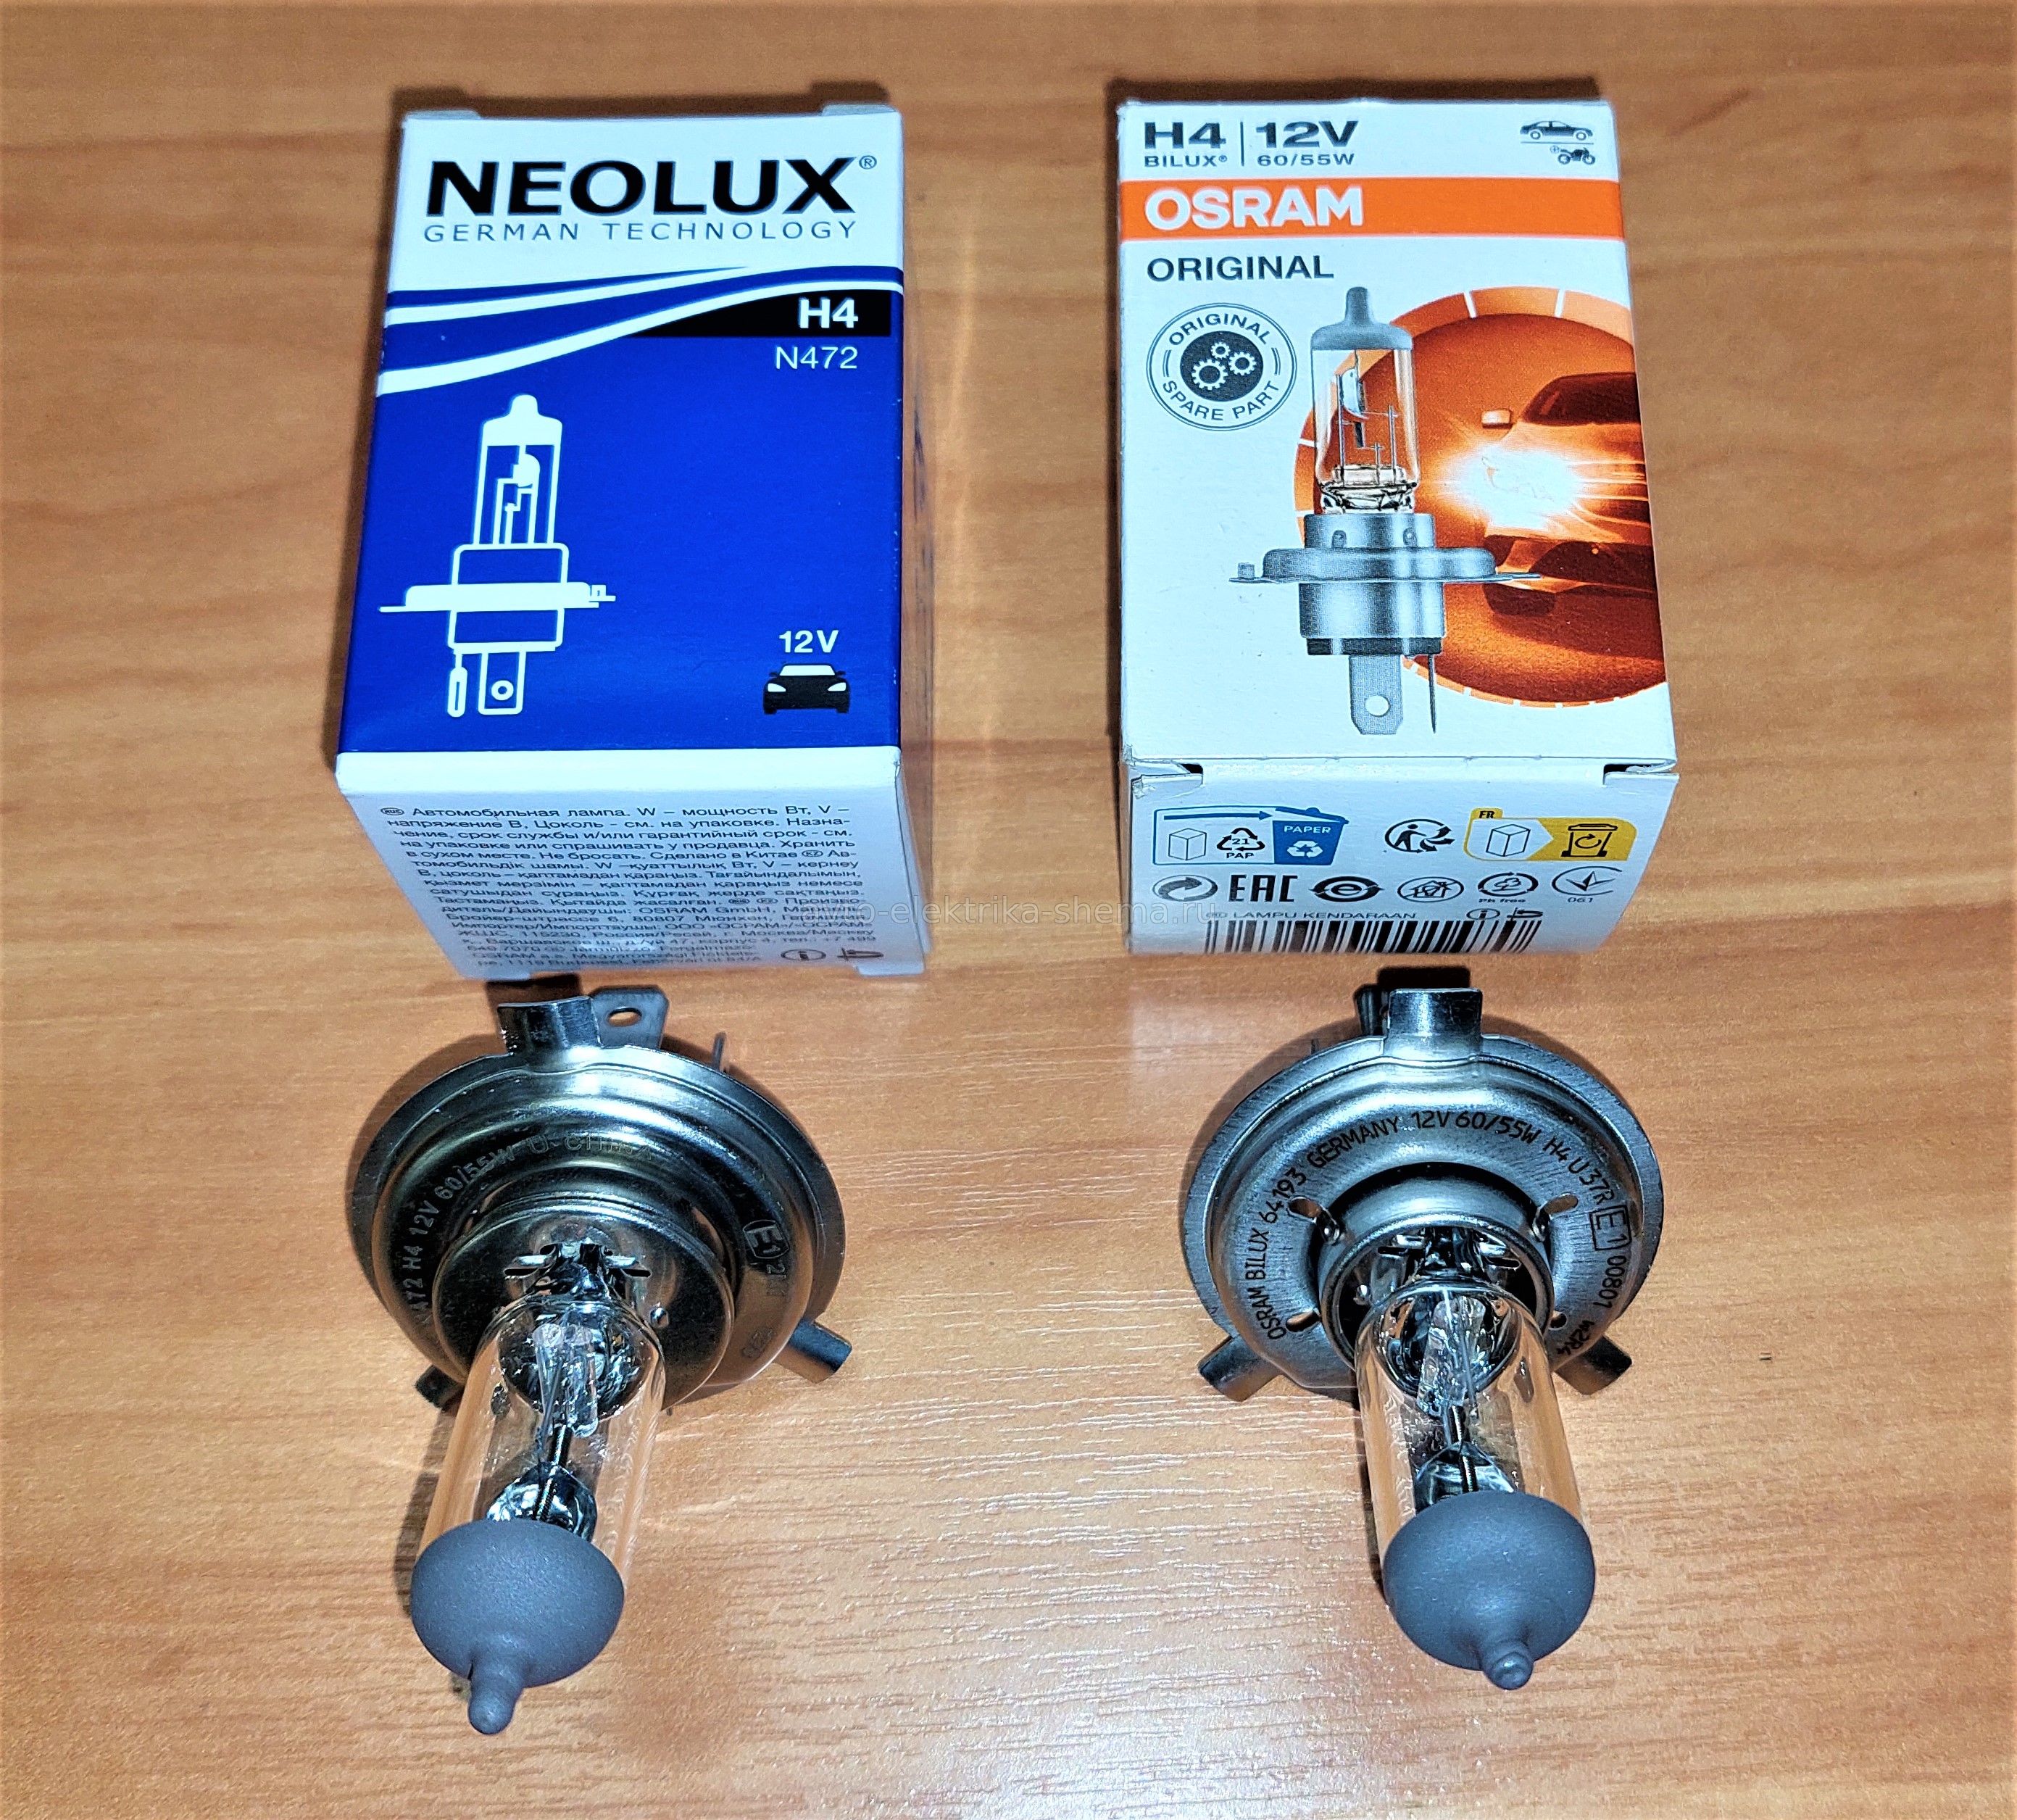 Сравнение ламп H4 Neolux и Osram